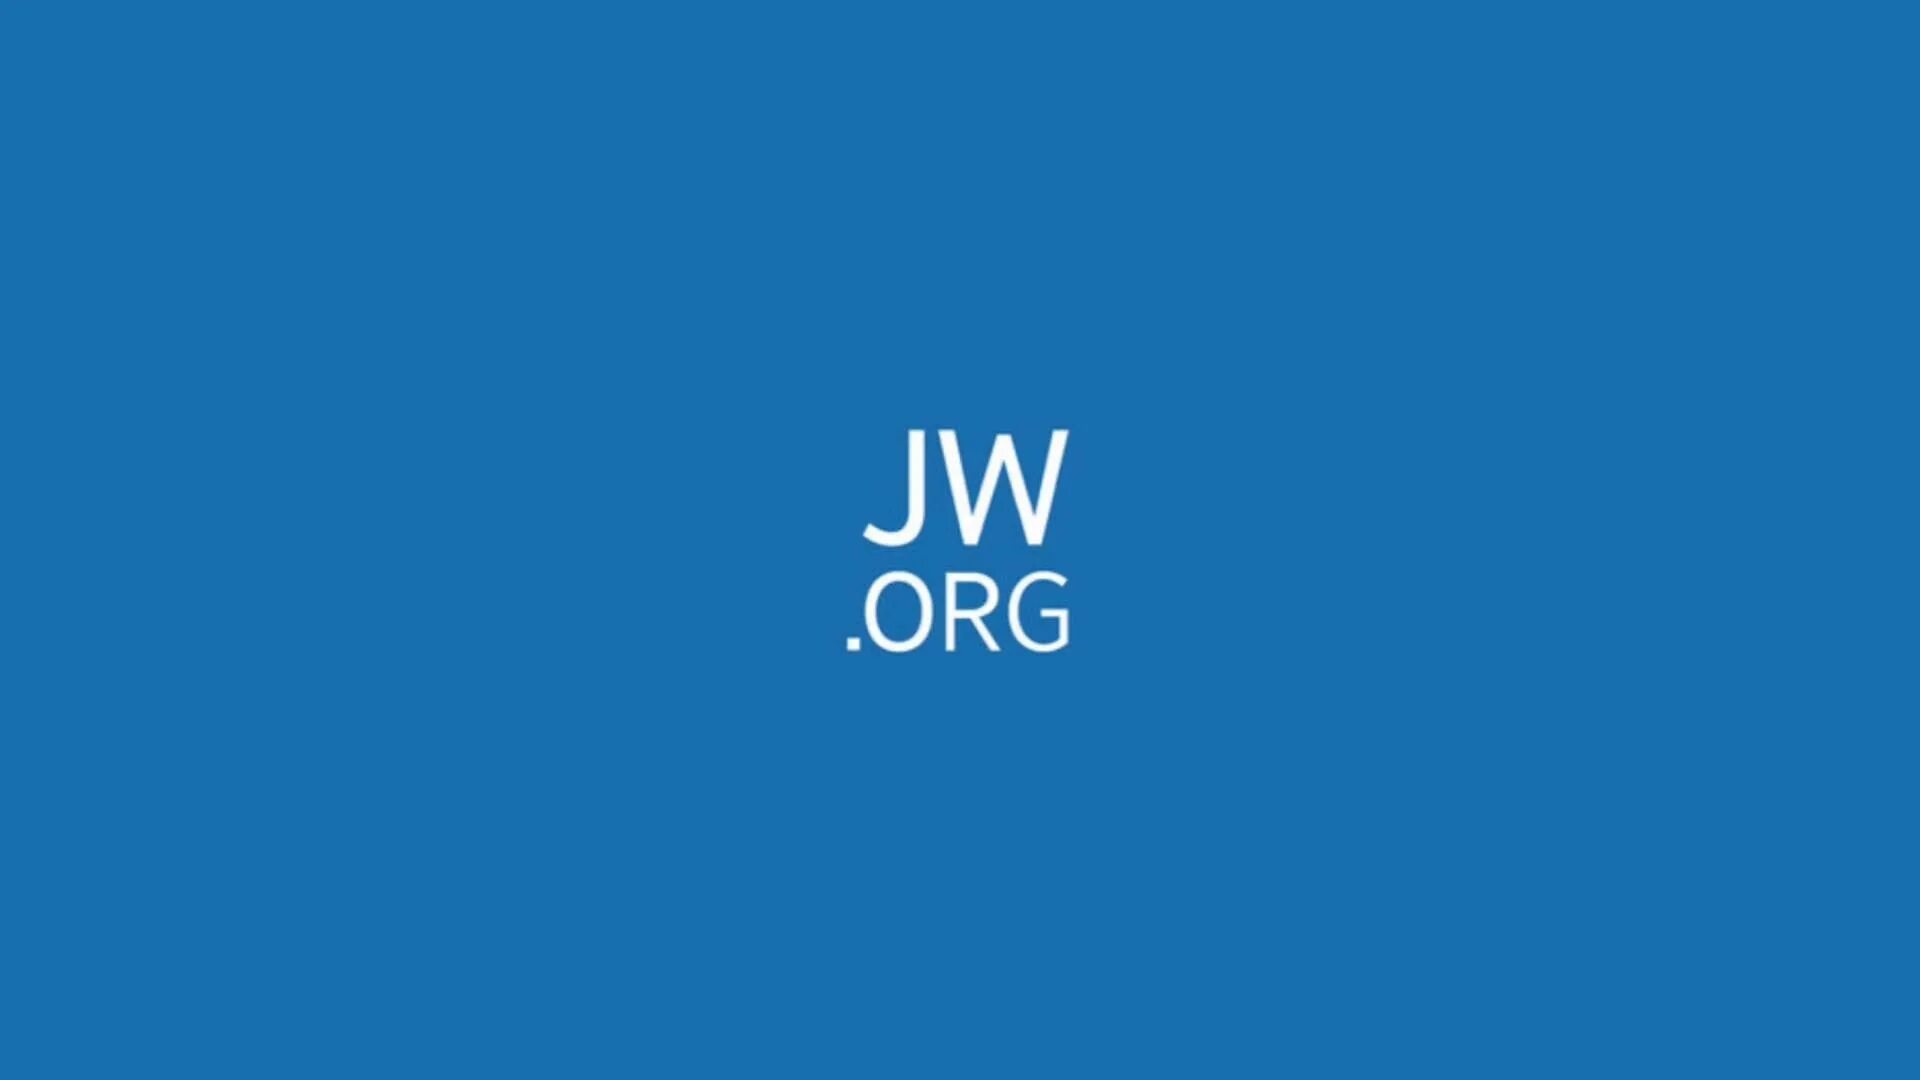 JW org. Эмблема JW. JW.org картинки. Логотип JW.org. Https jw org